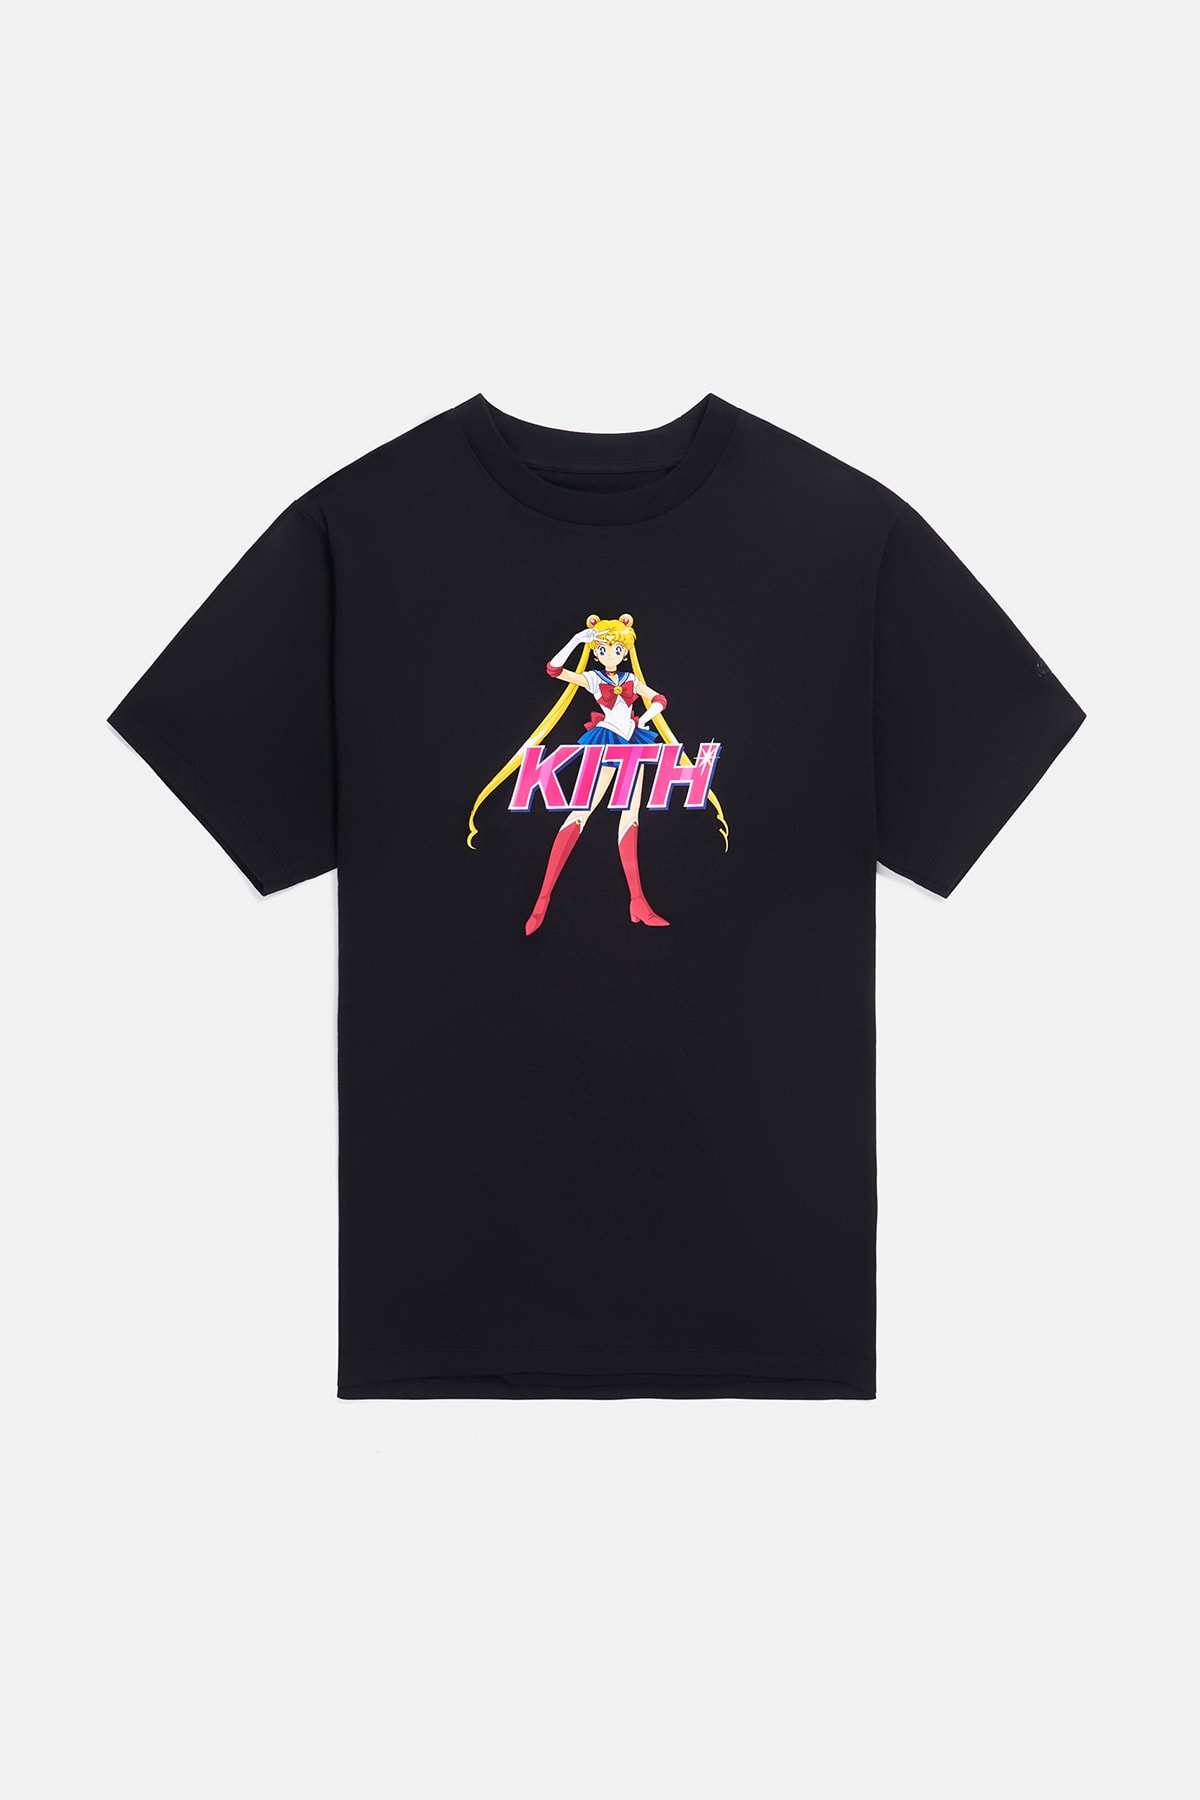 Sailor Moon x KITH Women Collaboration Collection T-Shirt Black